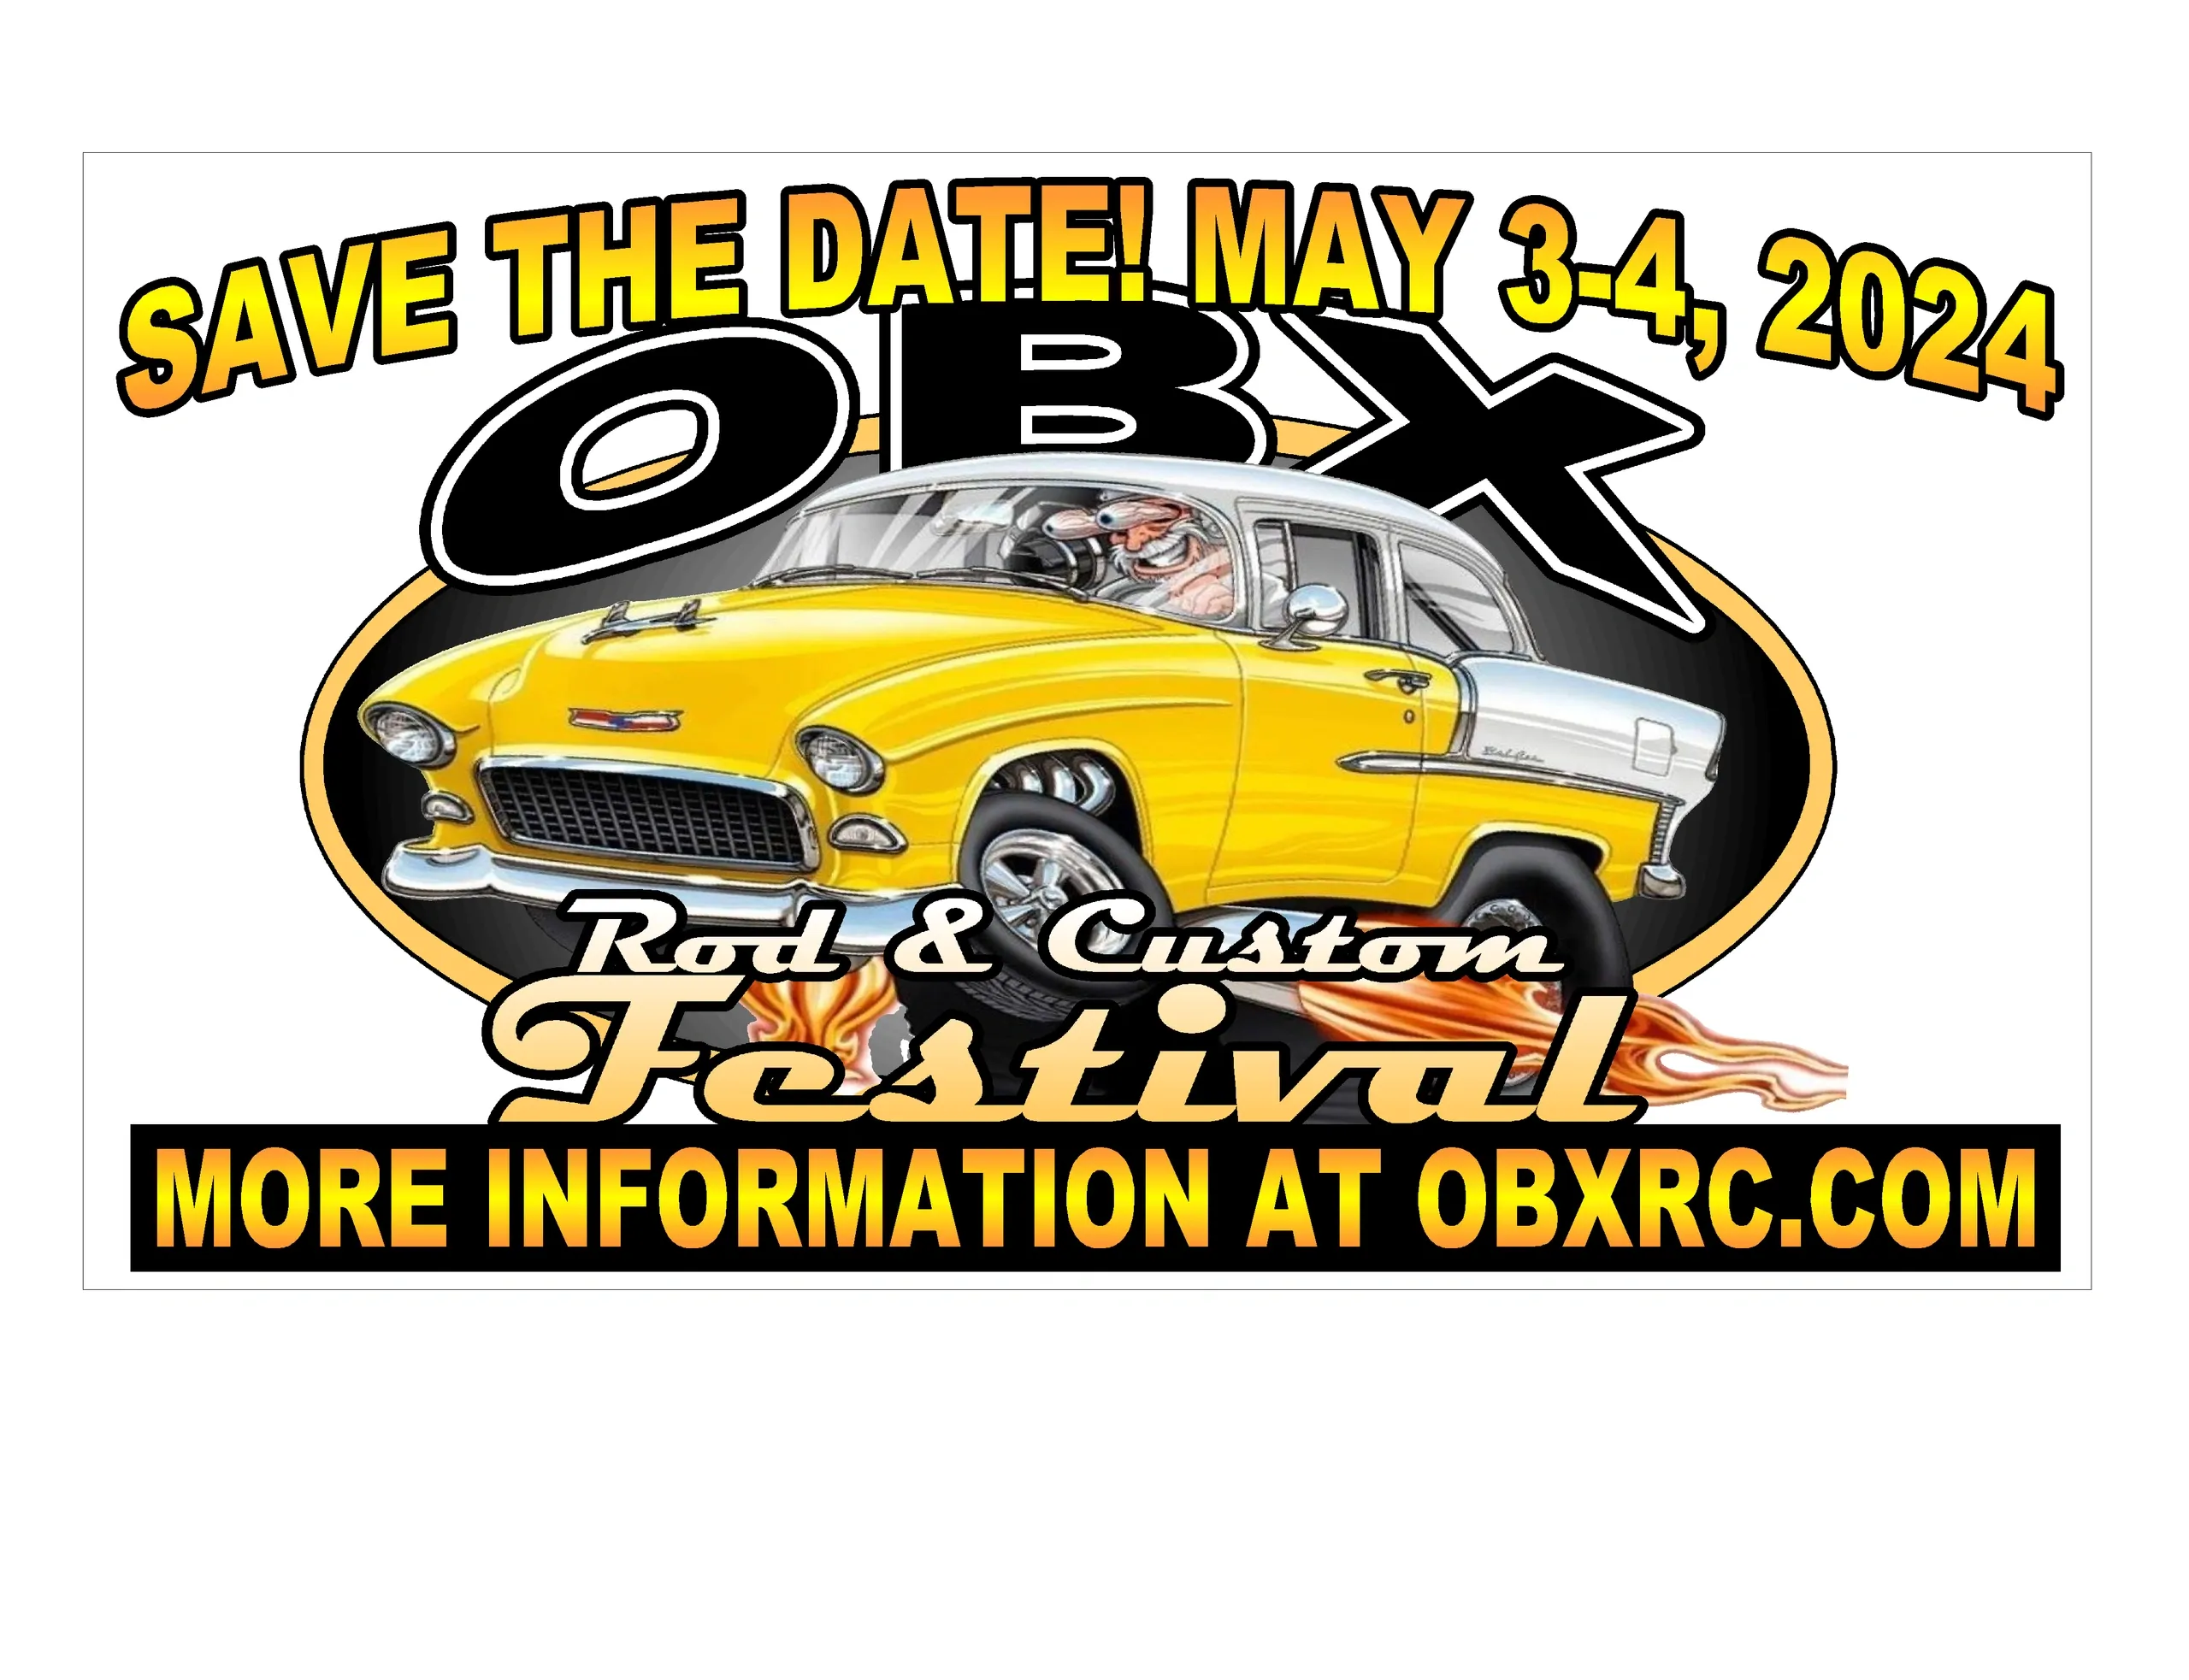 Bright yellow car logo for OBX Rod & Custom Festival, May 3-4, 2024.